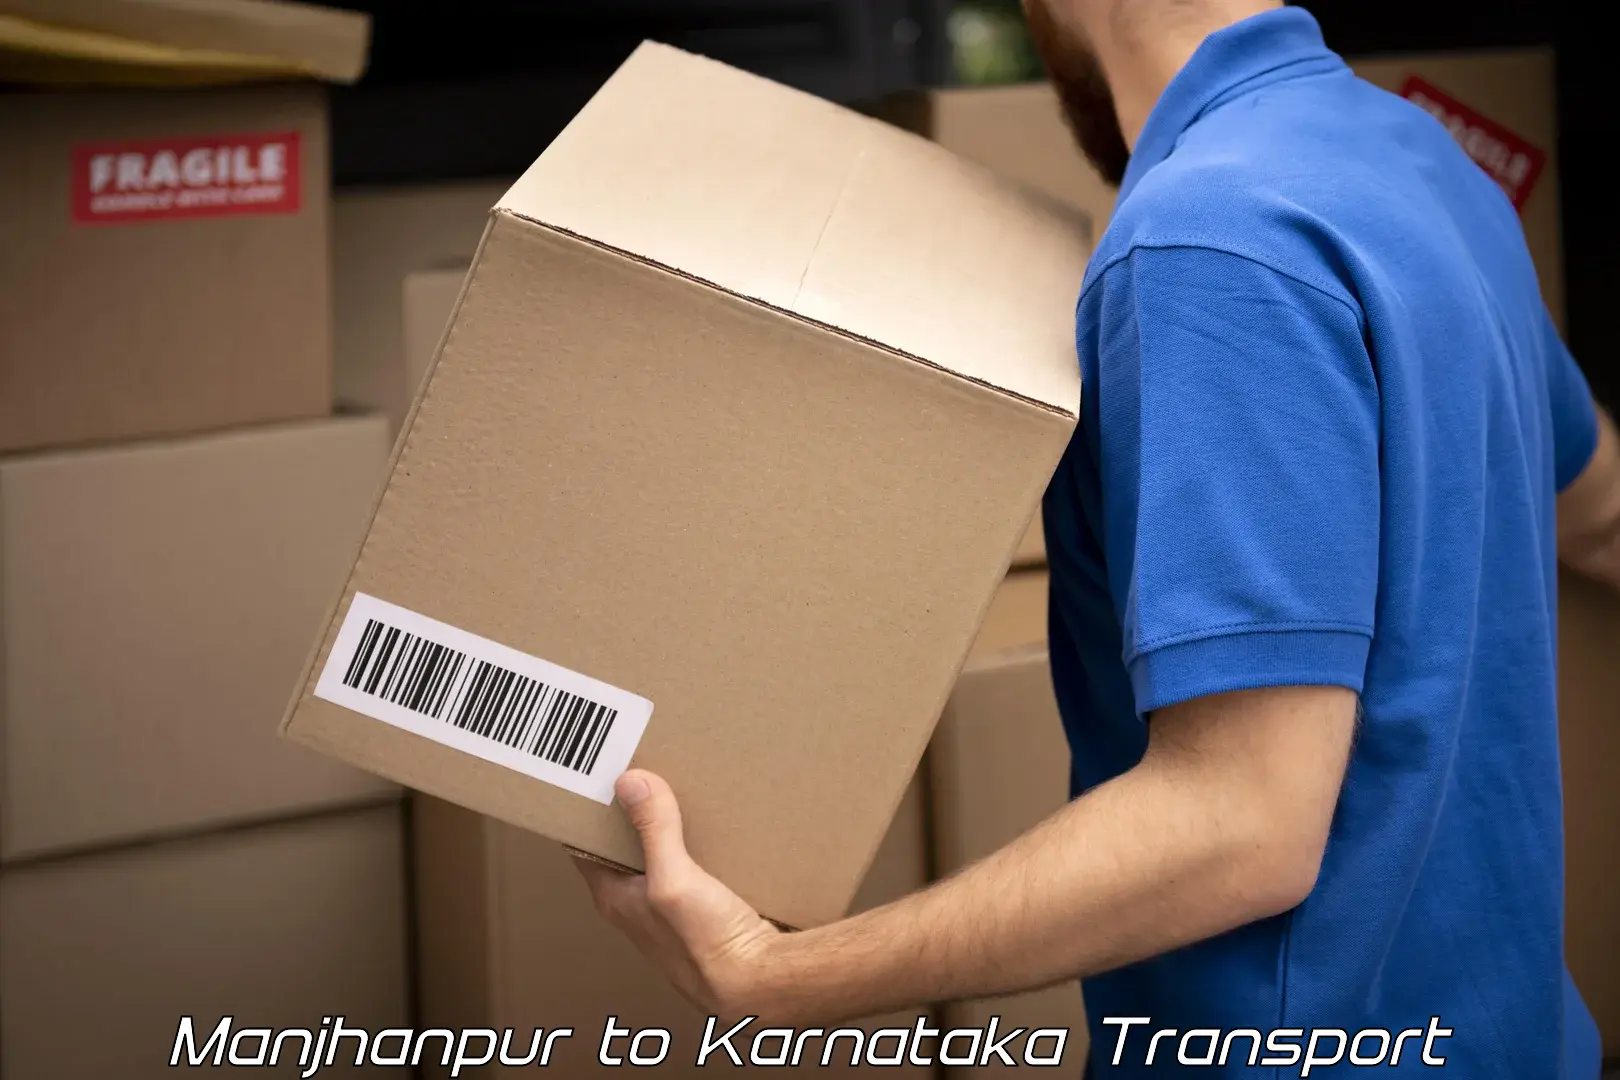 Transport in sharing Manjhanpur to Mangalore